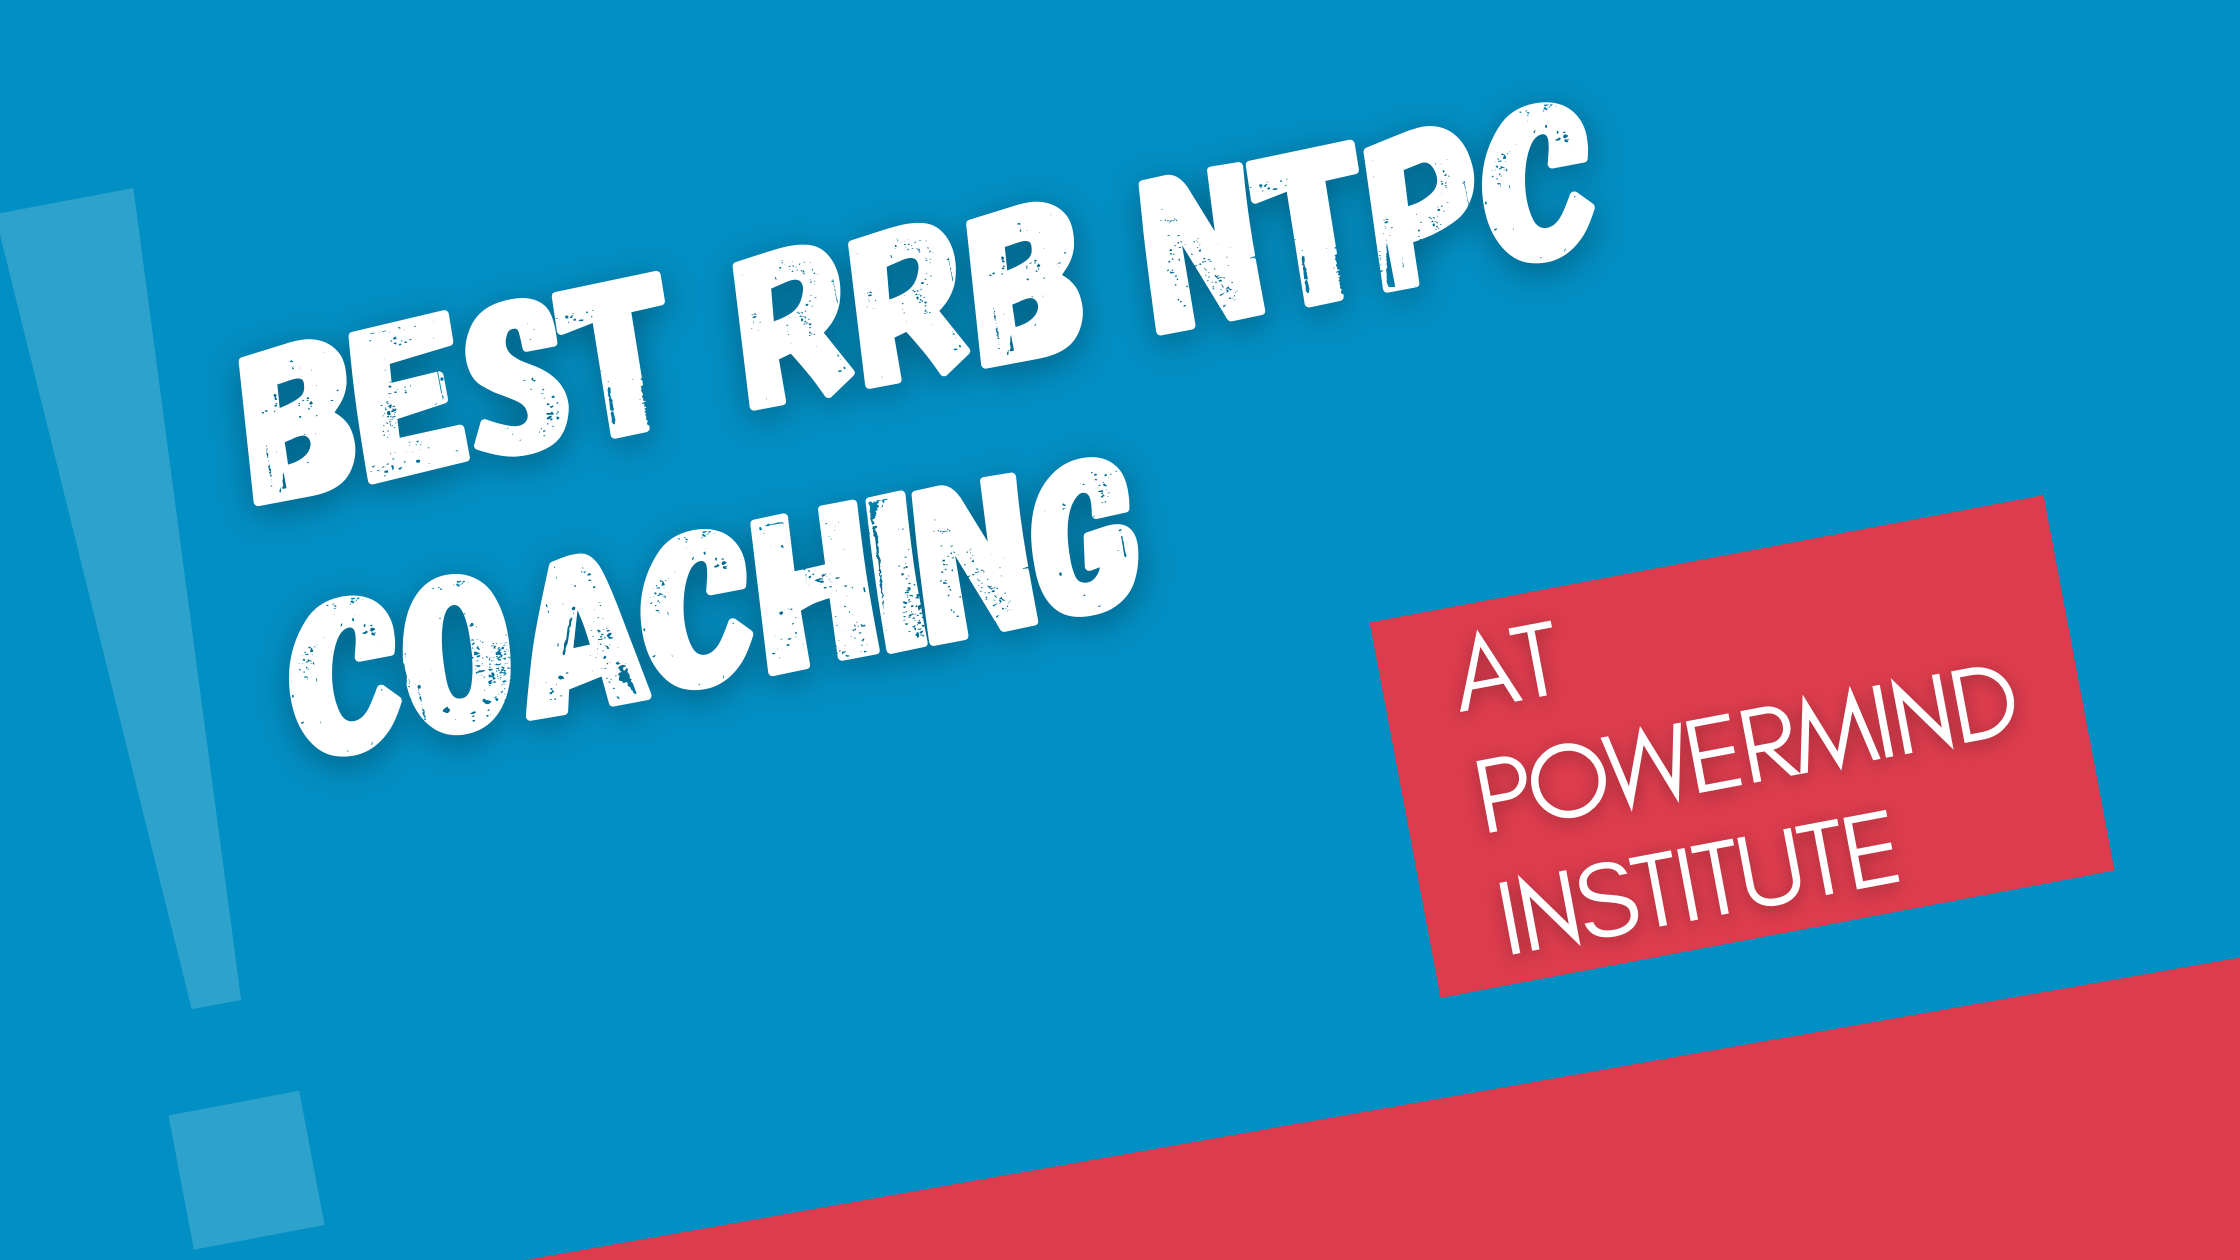 Best RRB NTPC coaching in jaipur